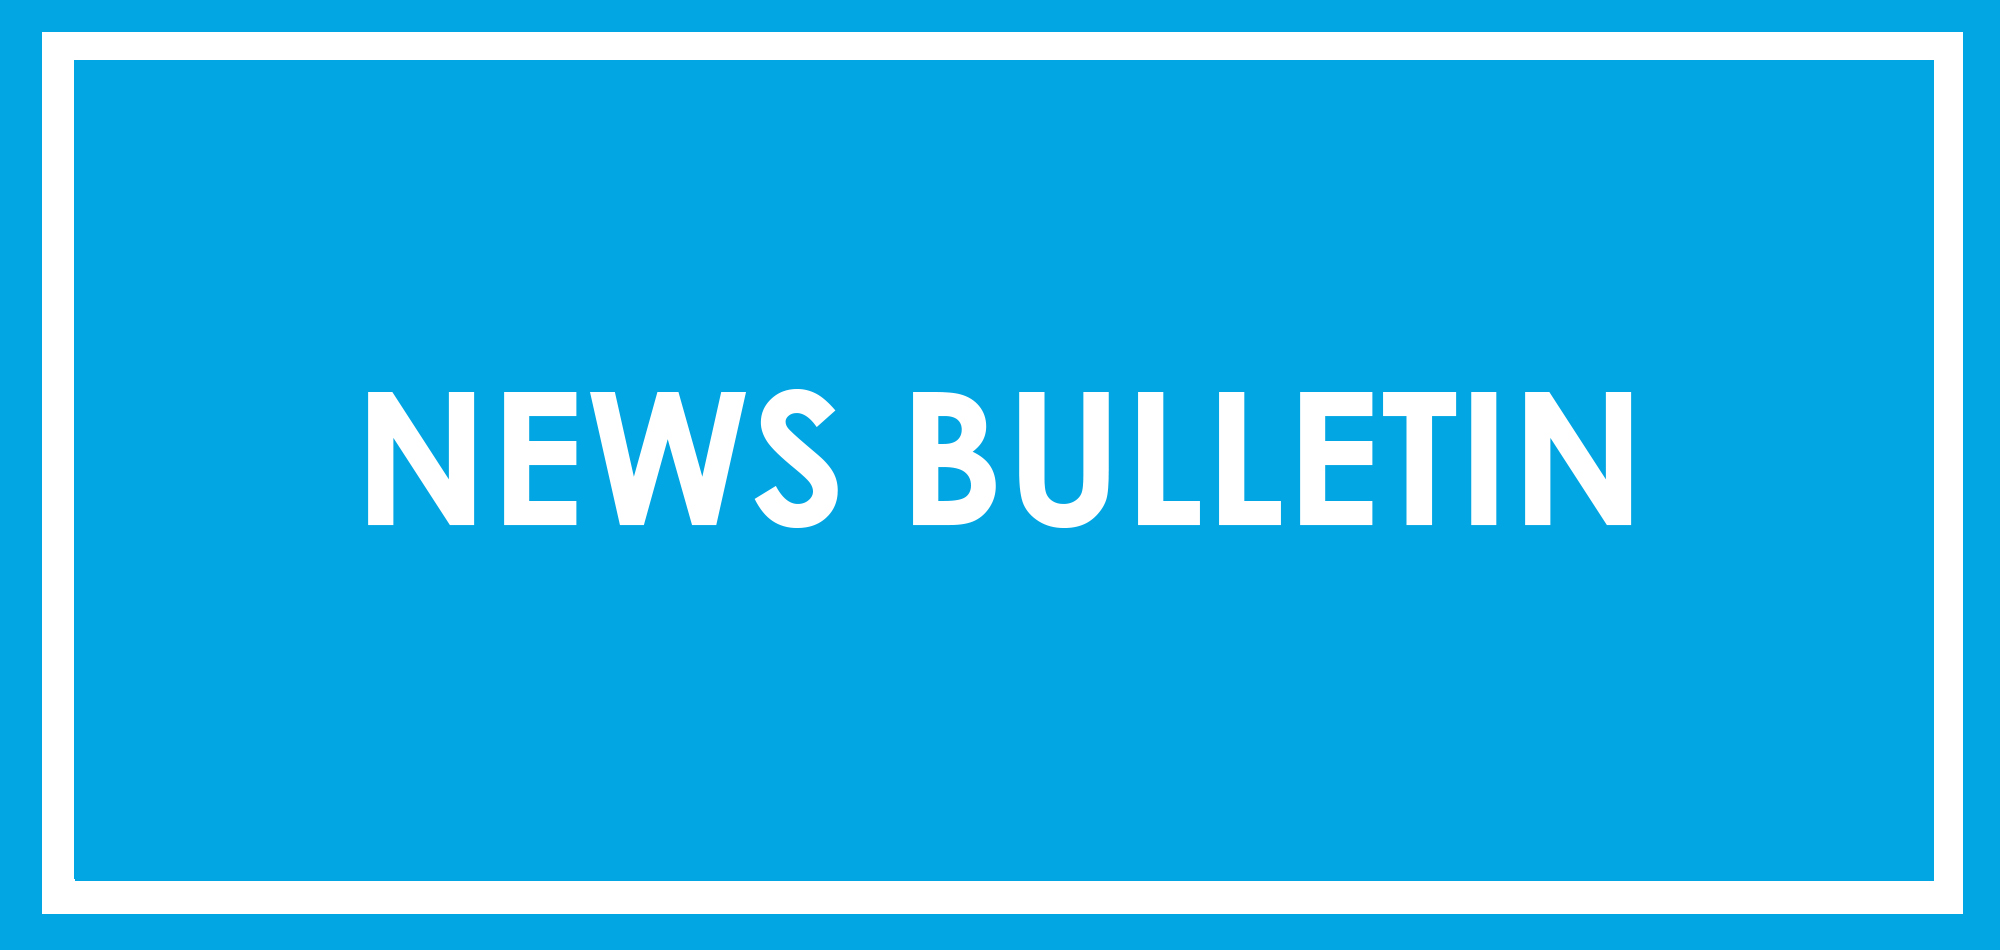 News Bulletin - 05.10.21